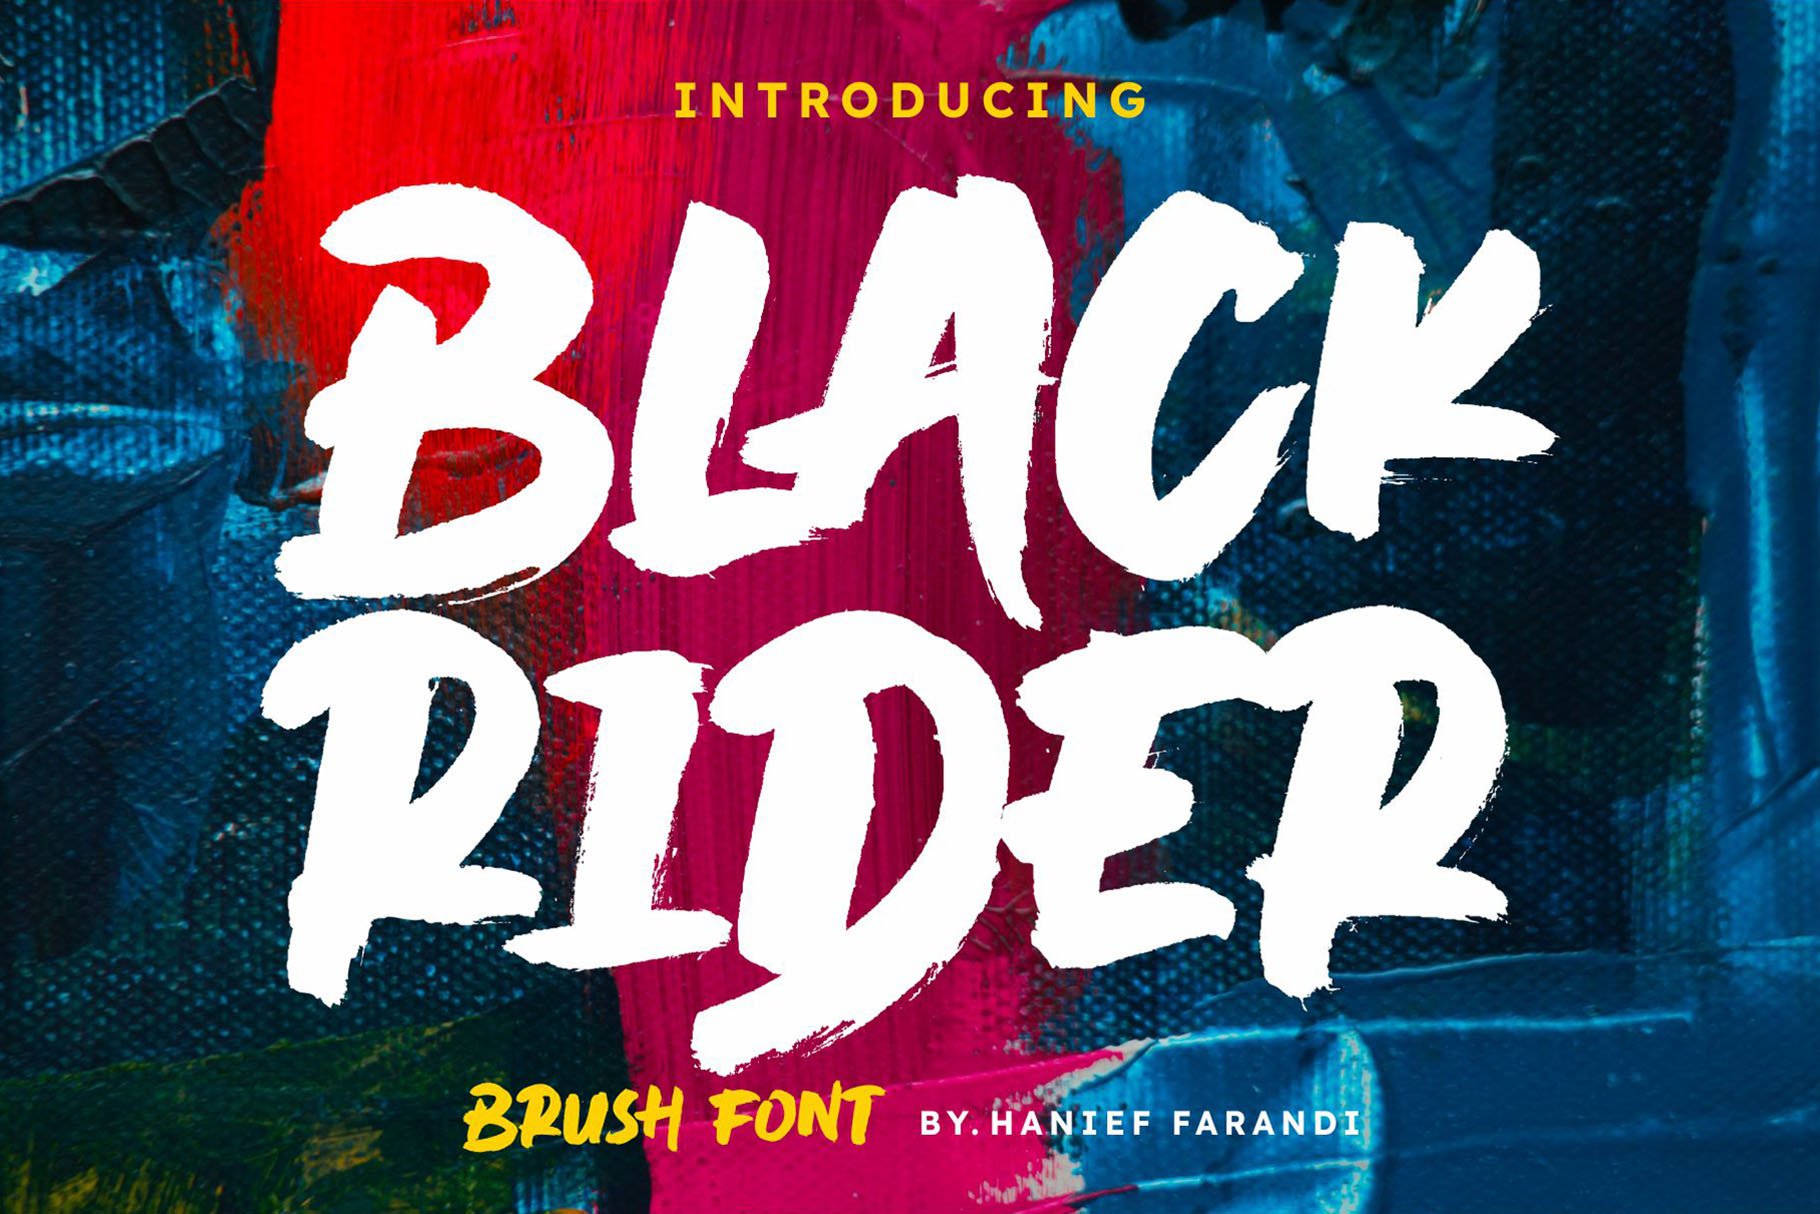 Black Rider Brush Font cover image.